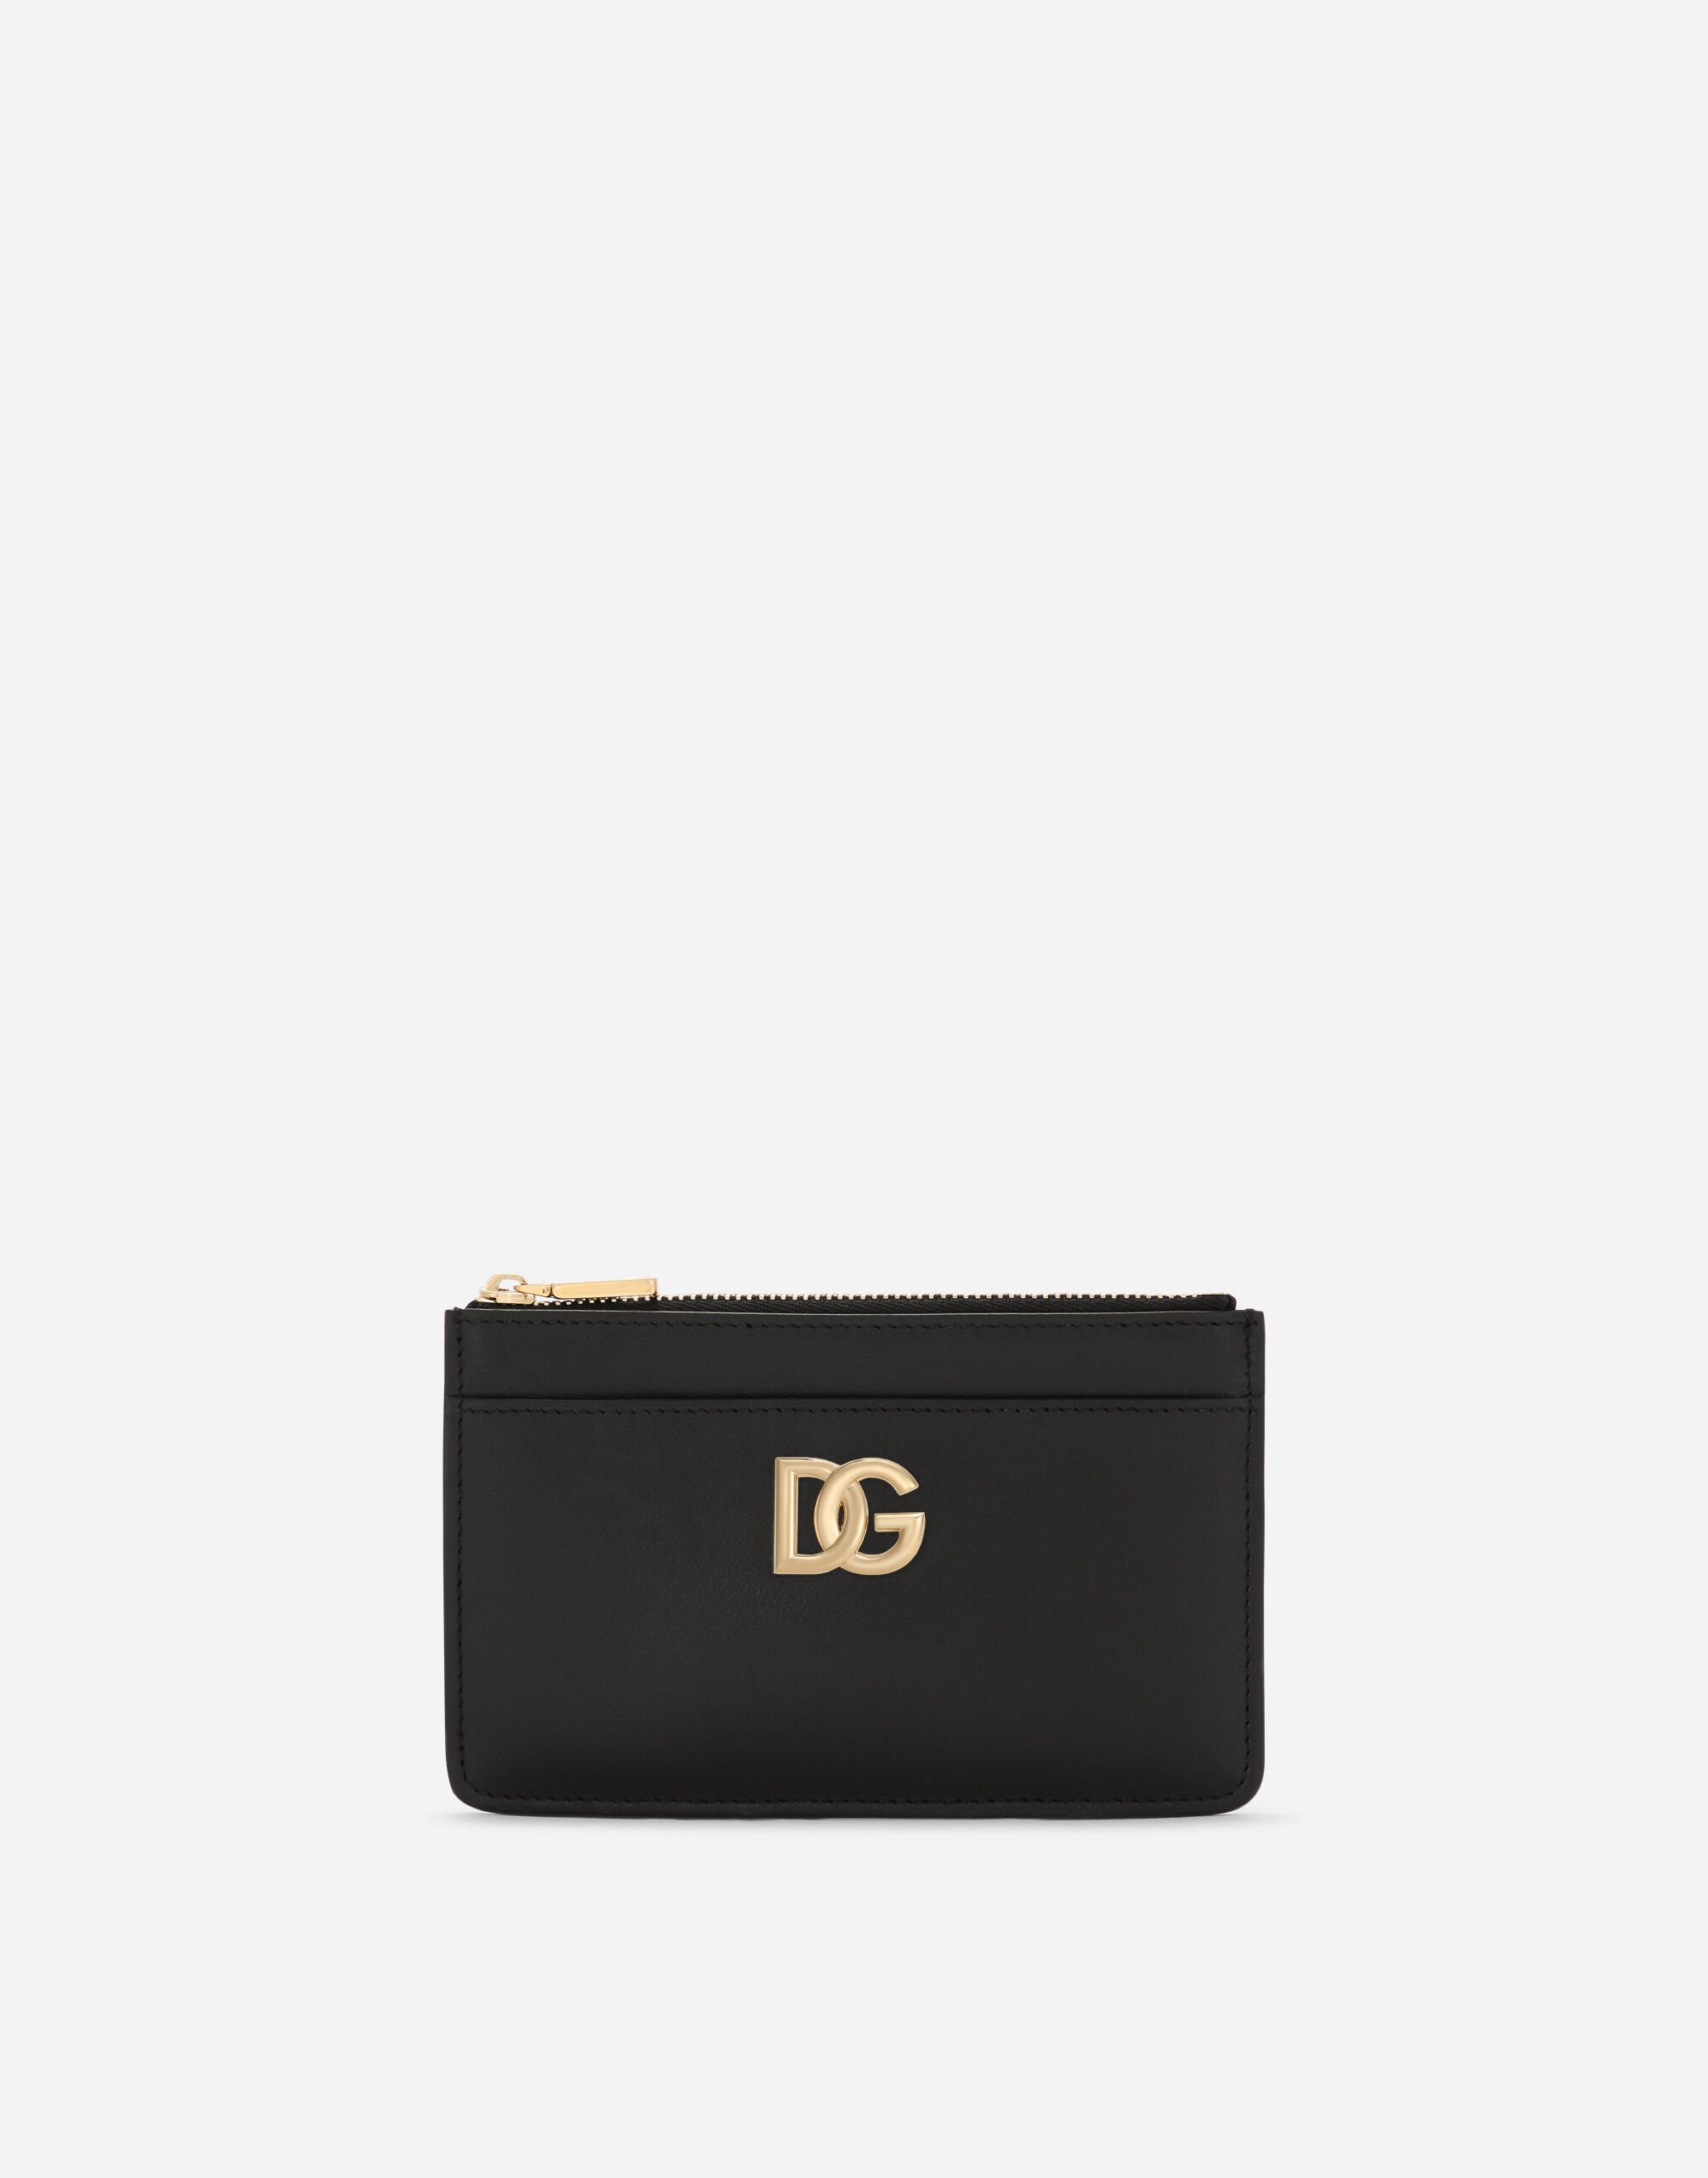 Dolce & Gabbana カードホルダー カーフスキン DGロゴ ゴールド WRQA1GWQC01